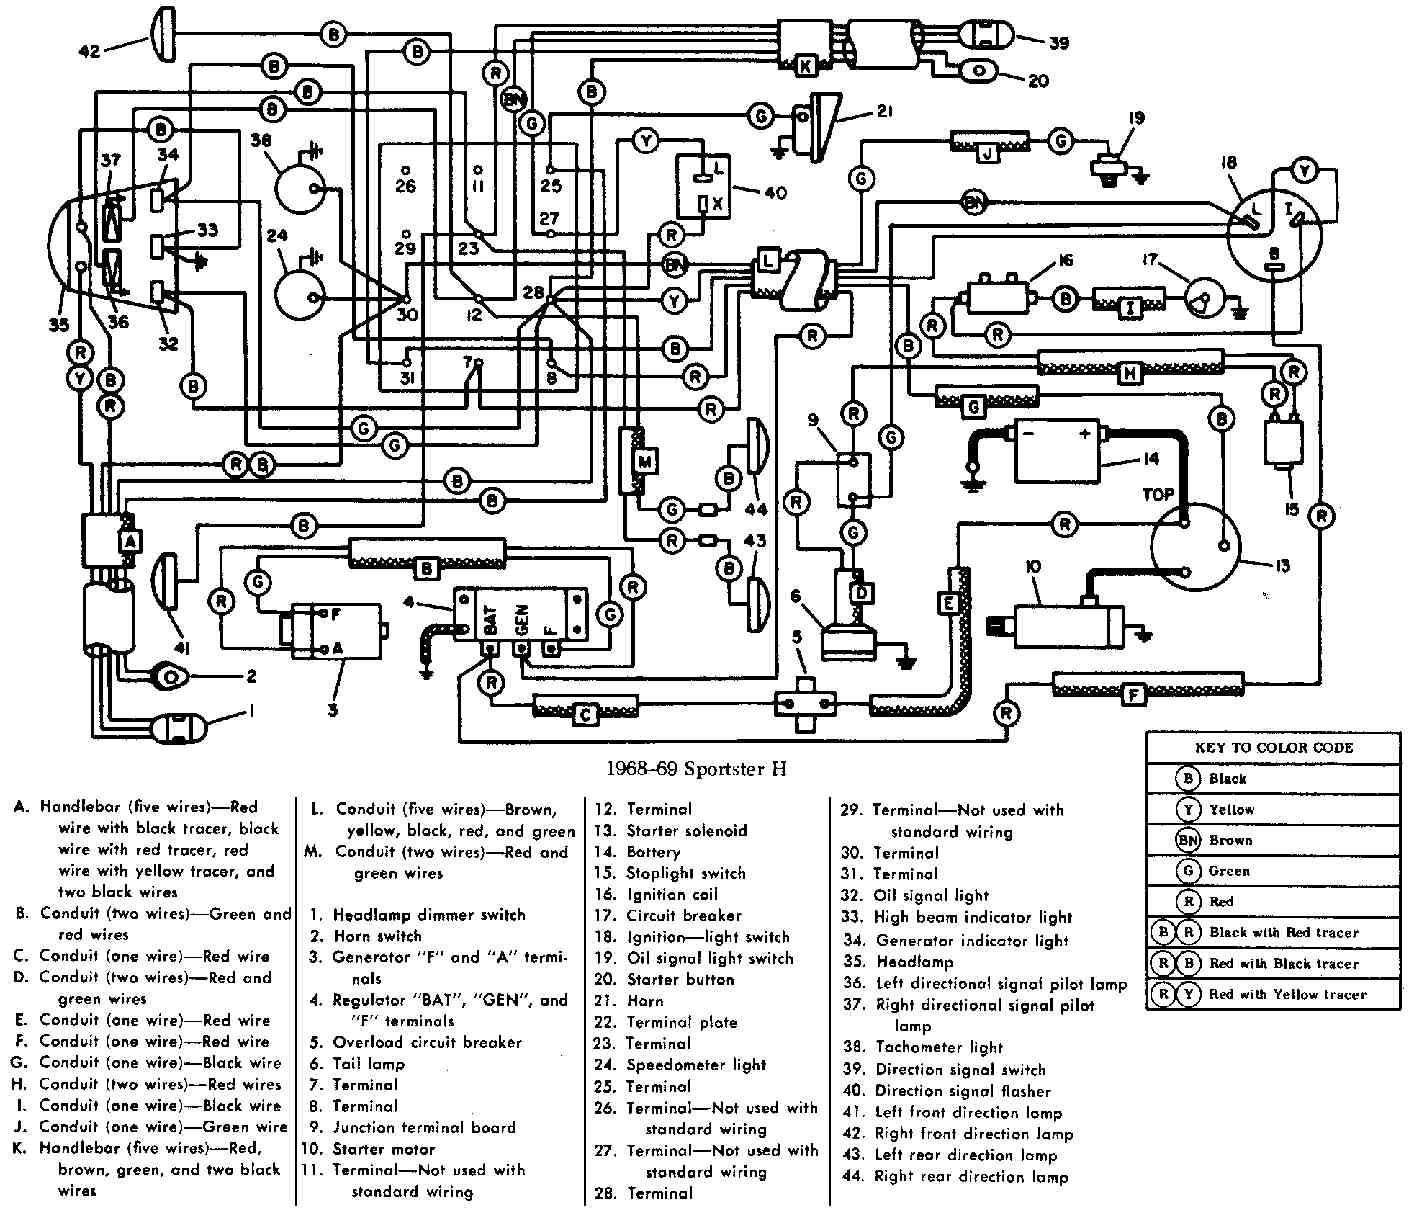 HARLEY DAVIDSON - Motorcycles Manual Pdf, Wiring Diagram & Fault Codes Mini Chopper Wiring Diagram MOTORCYCLE Manuals PDF & Wiring Diagrams